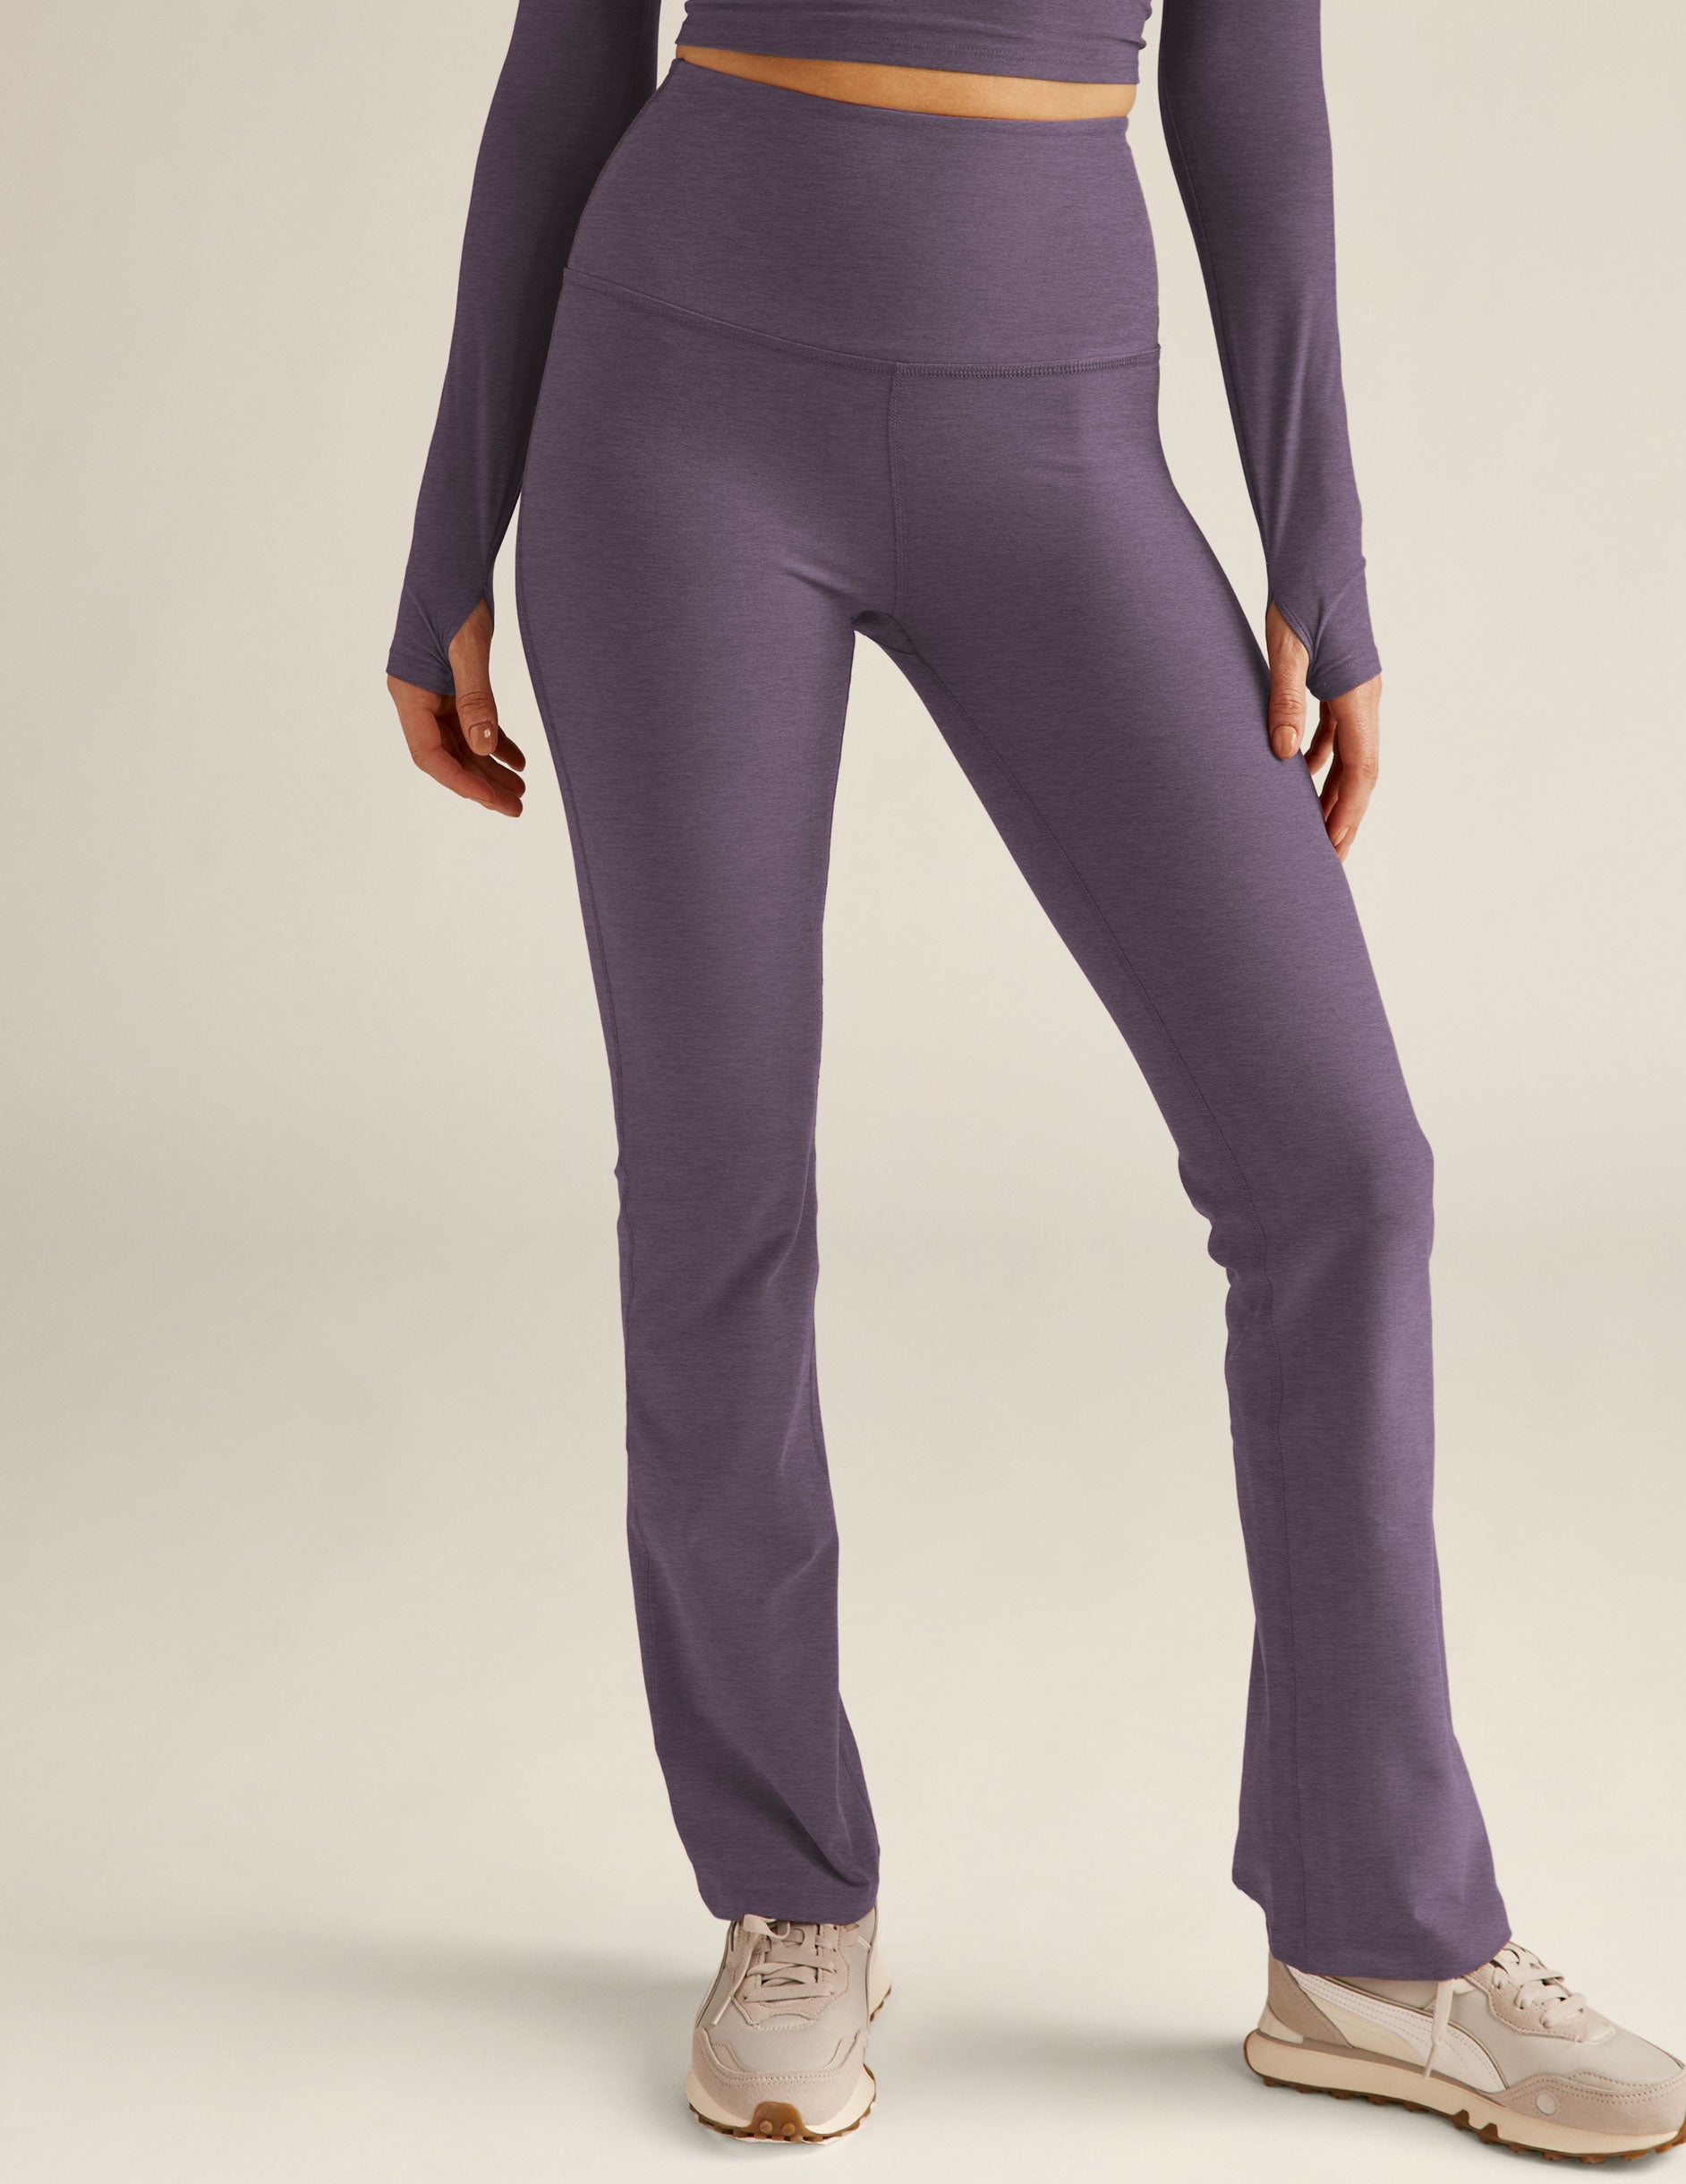 purple high-waisted bootcut pants. 